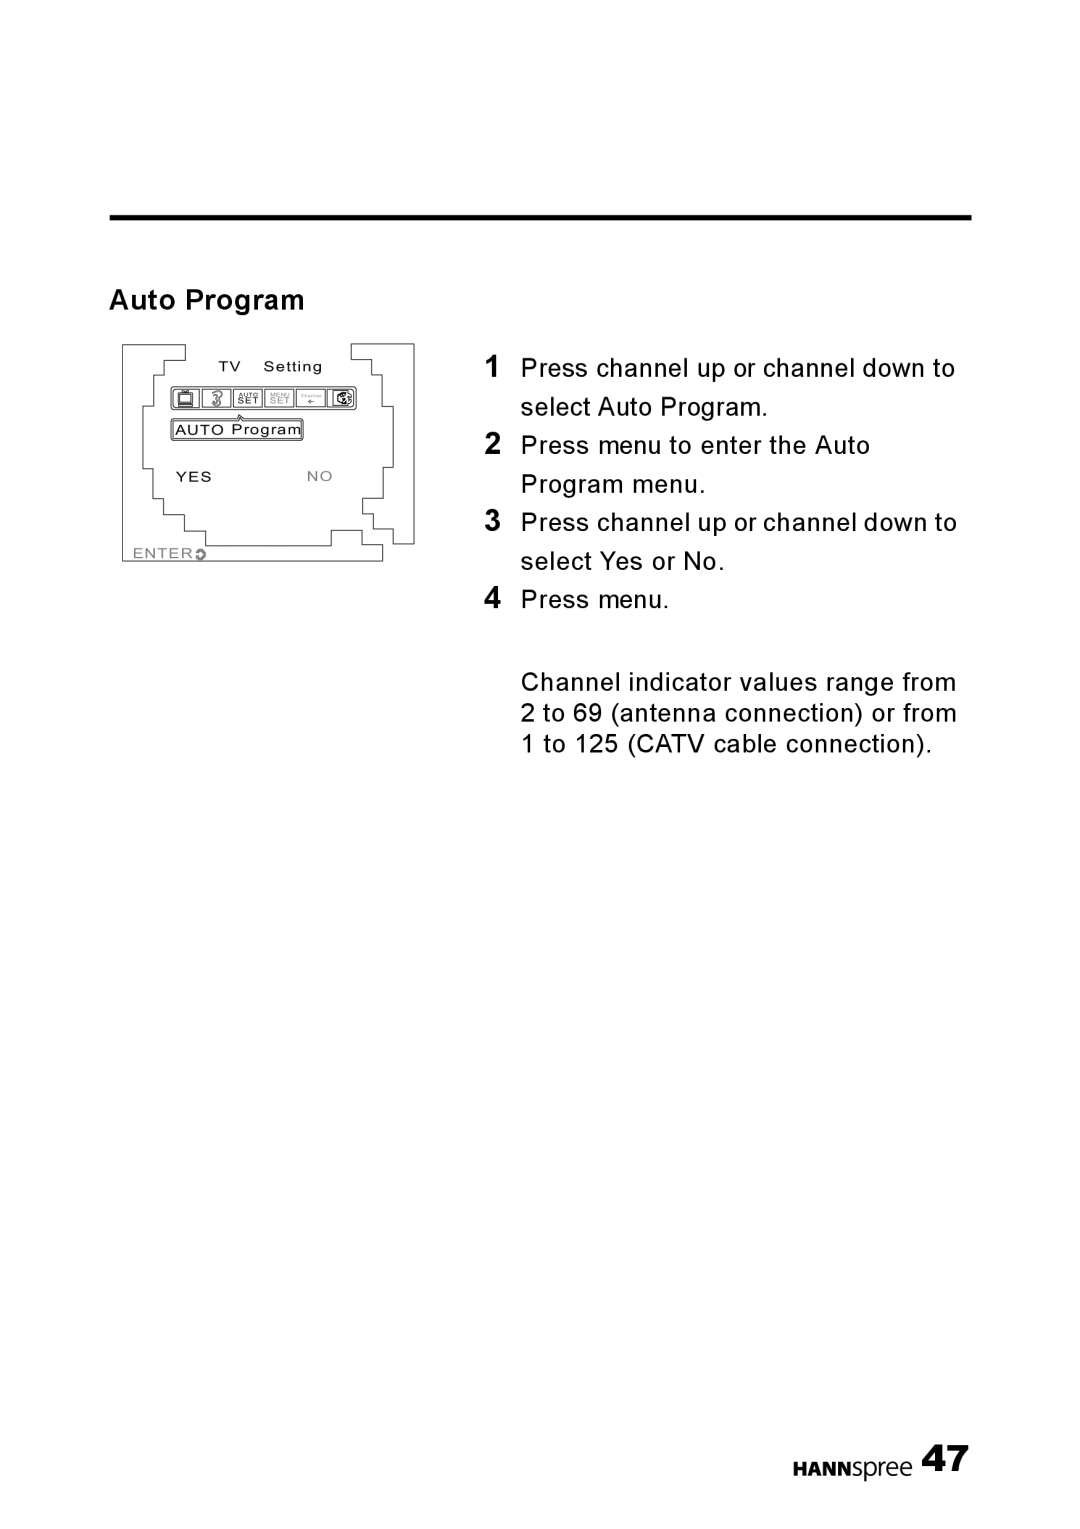 HANNspree HANNSz.crab user manual Auto Program, TV Setting, AUTO Program YESNO, Enter, Set Set +, AUTO MENU Channel 